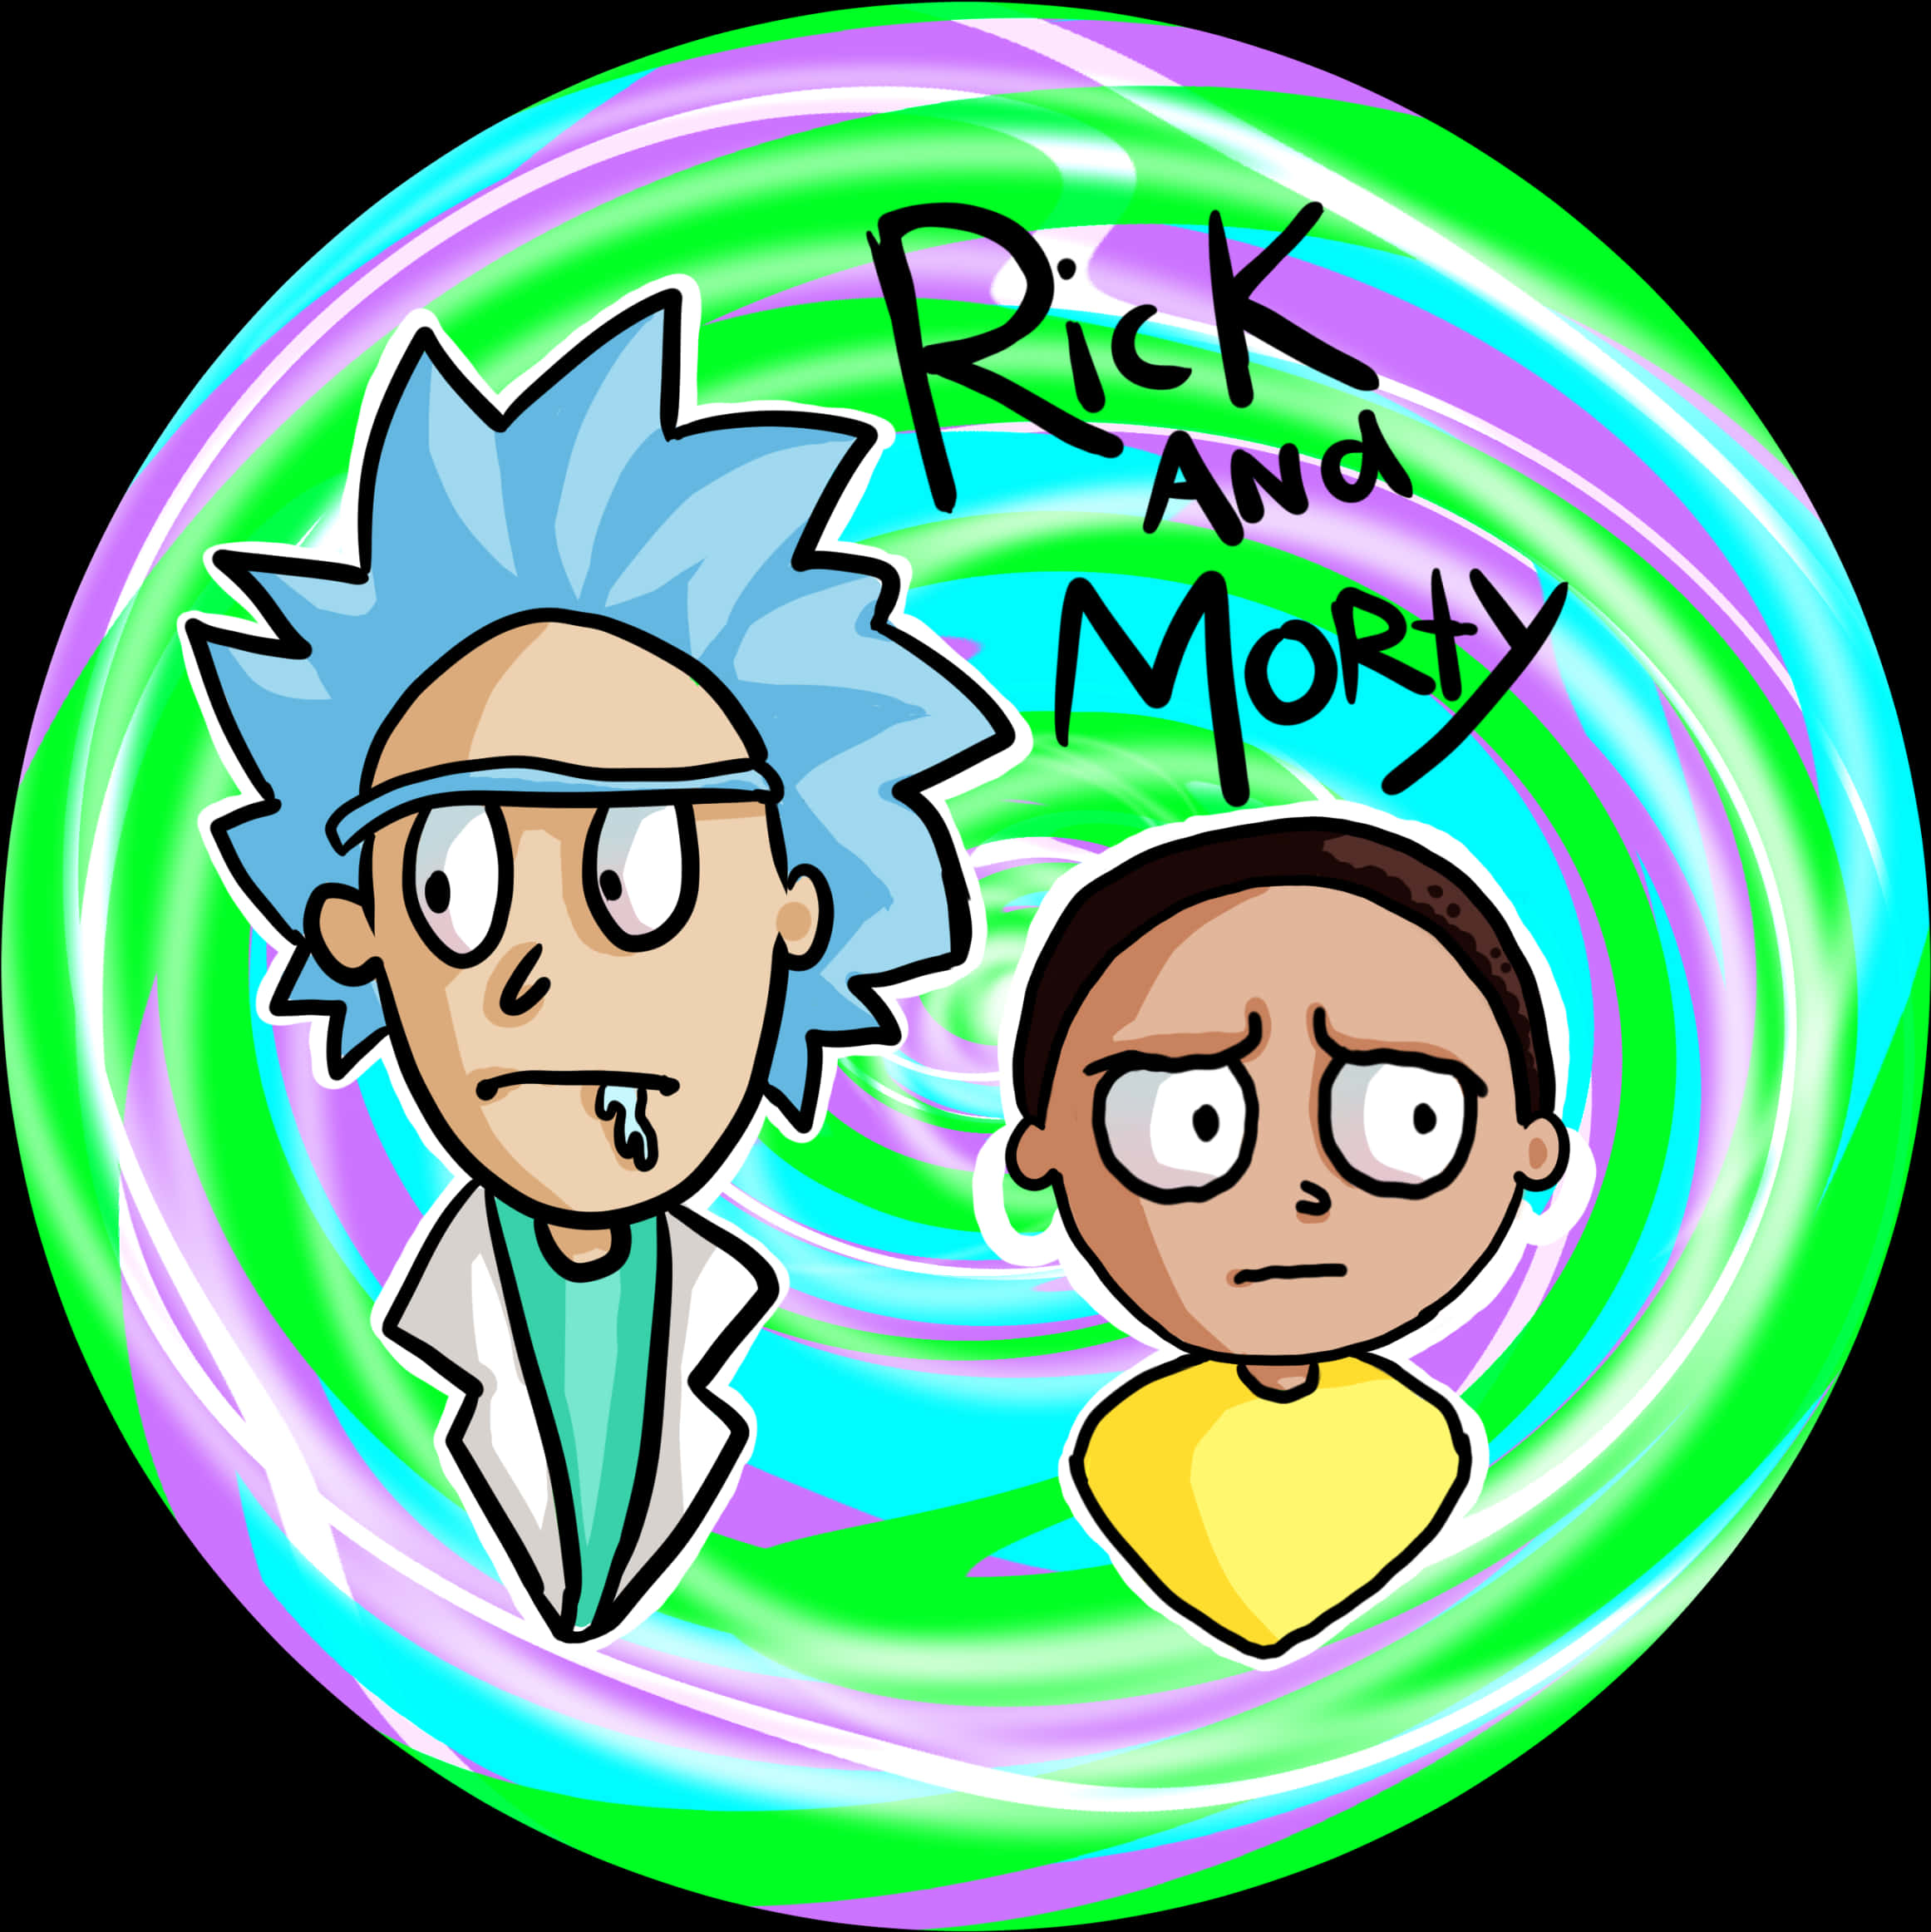 Rickand Morty Animated Characters